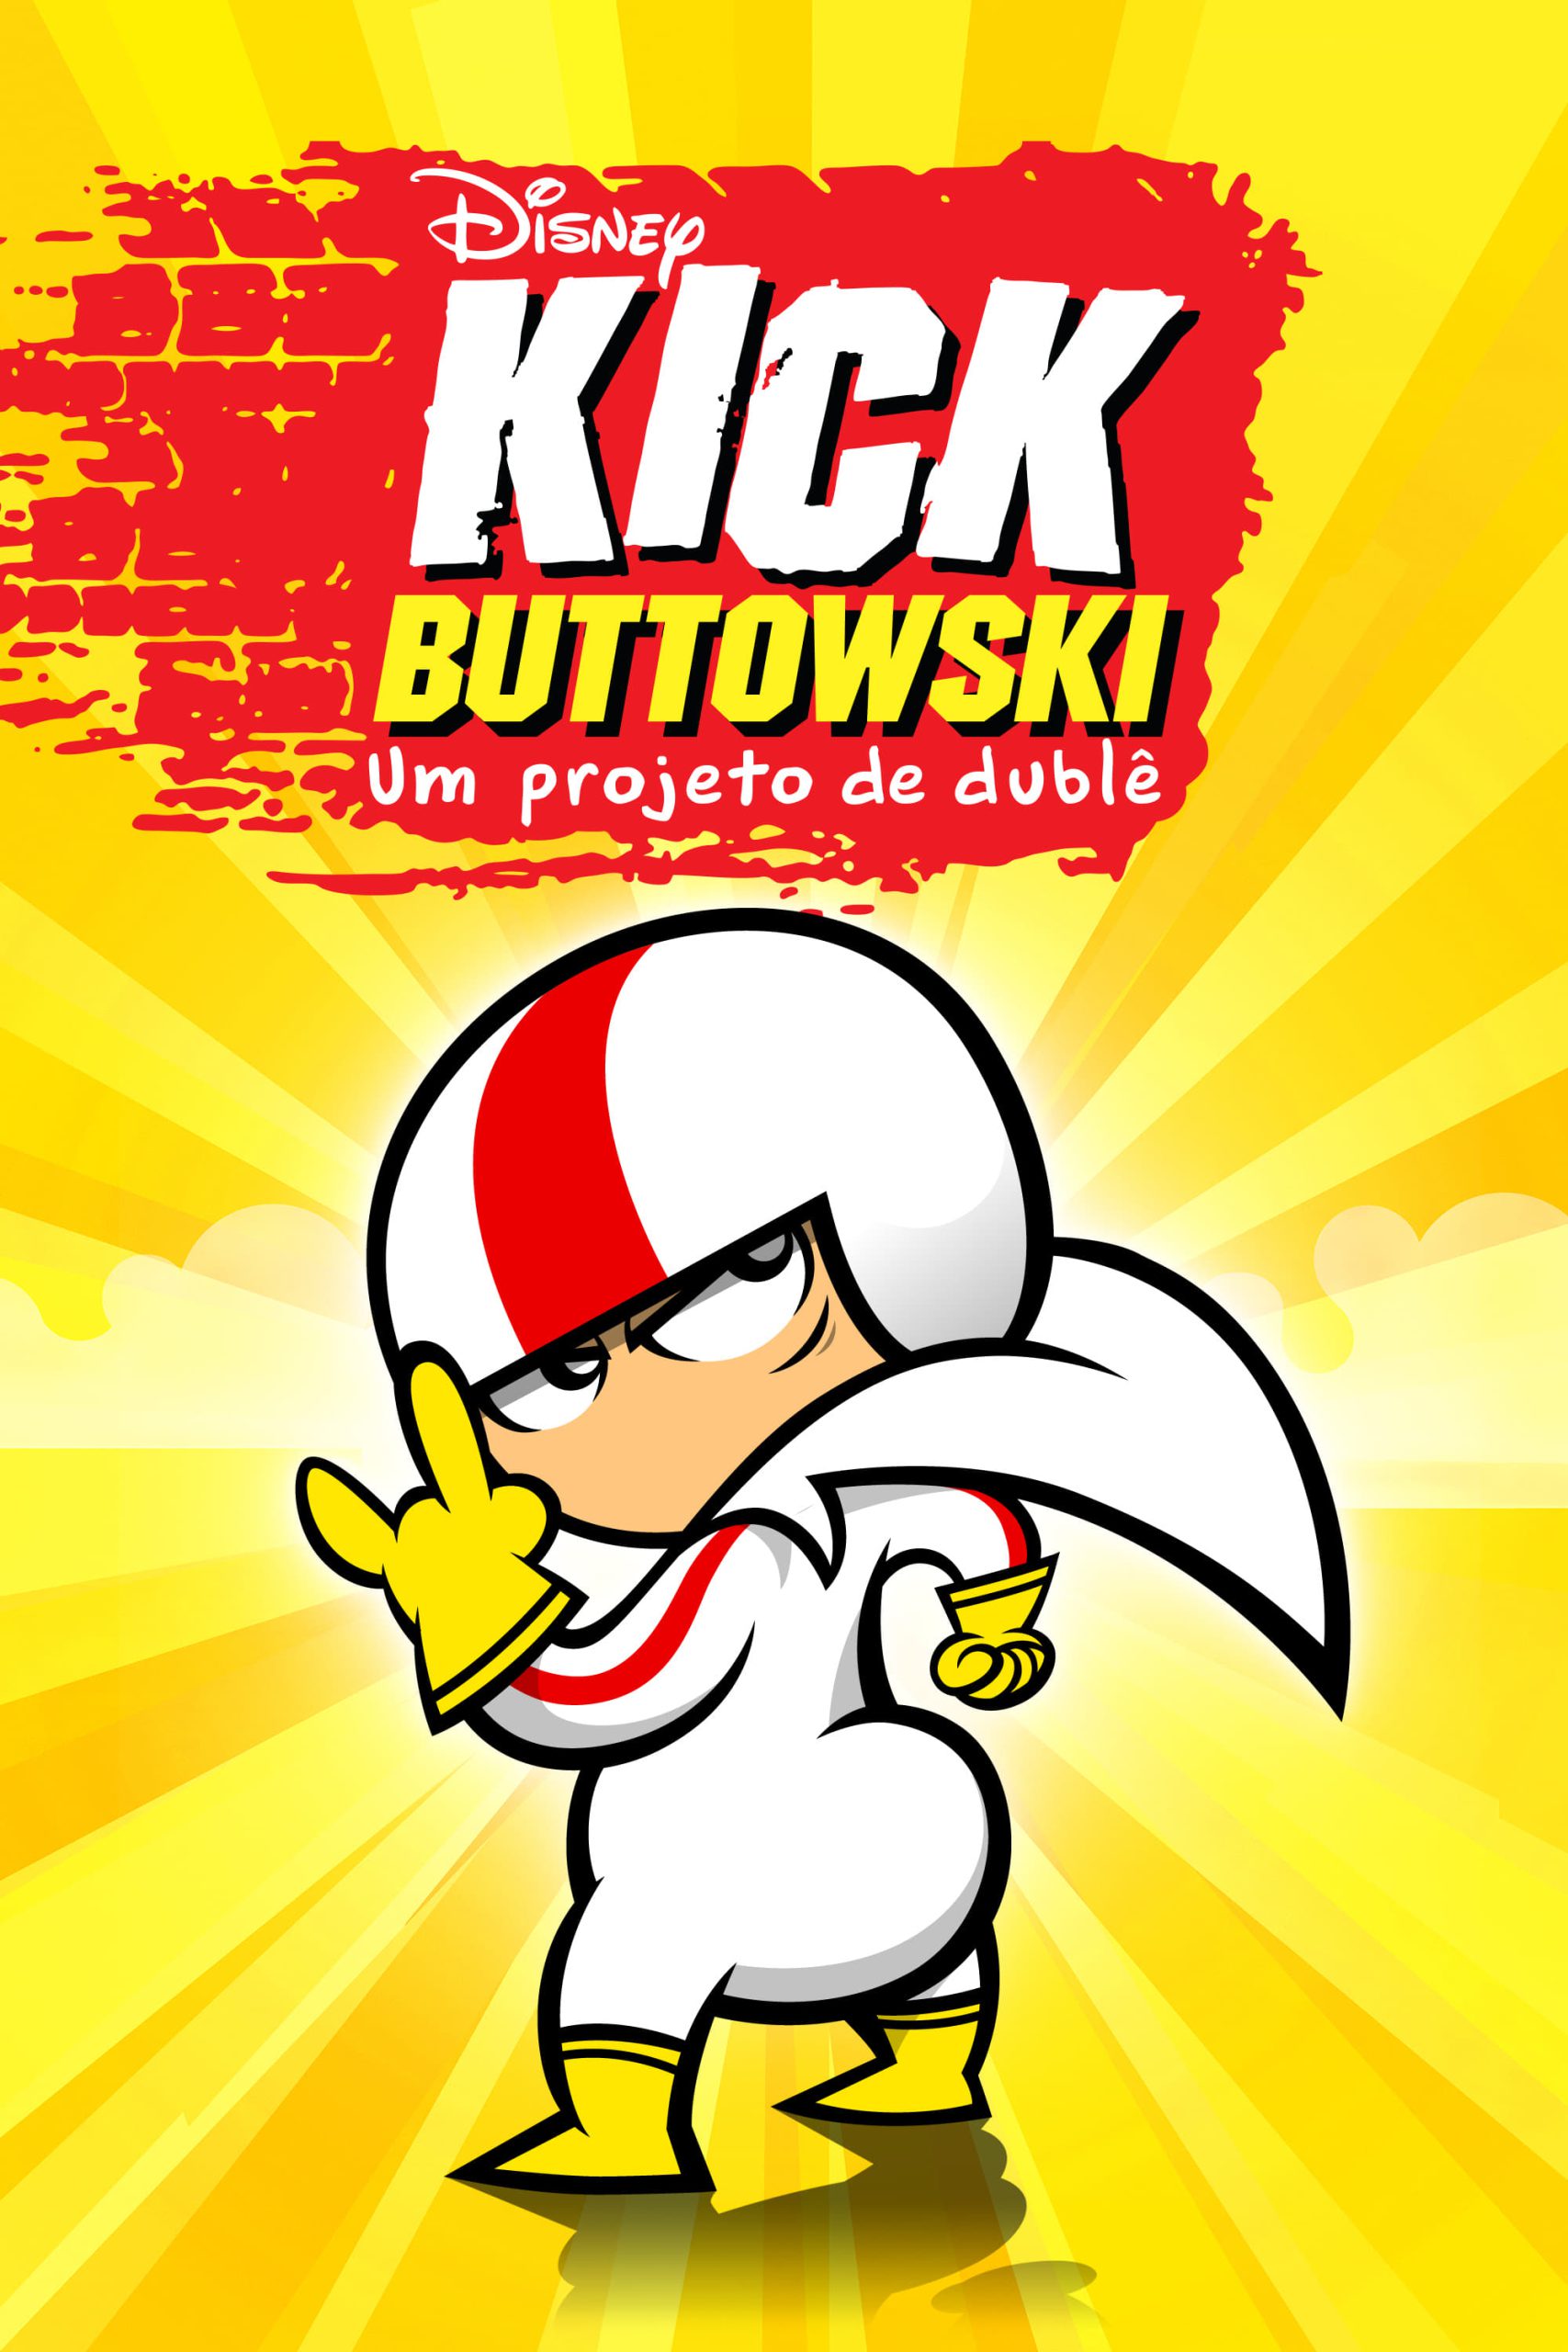 Kick Buttowski: Um Projeto de Duble Episódio 8